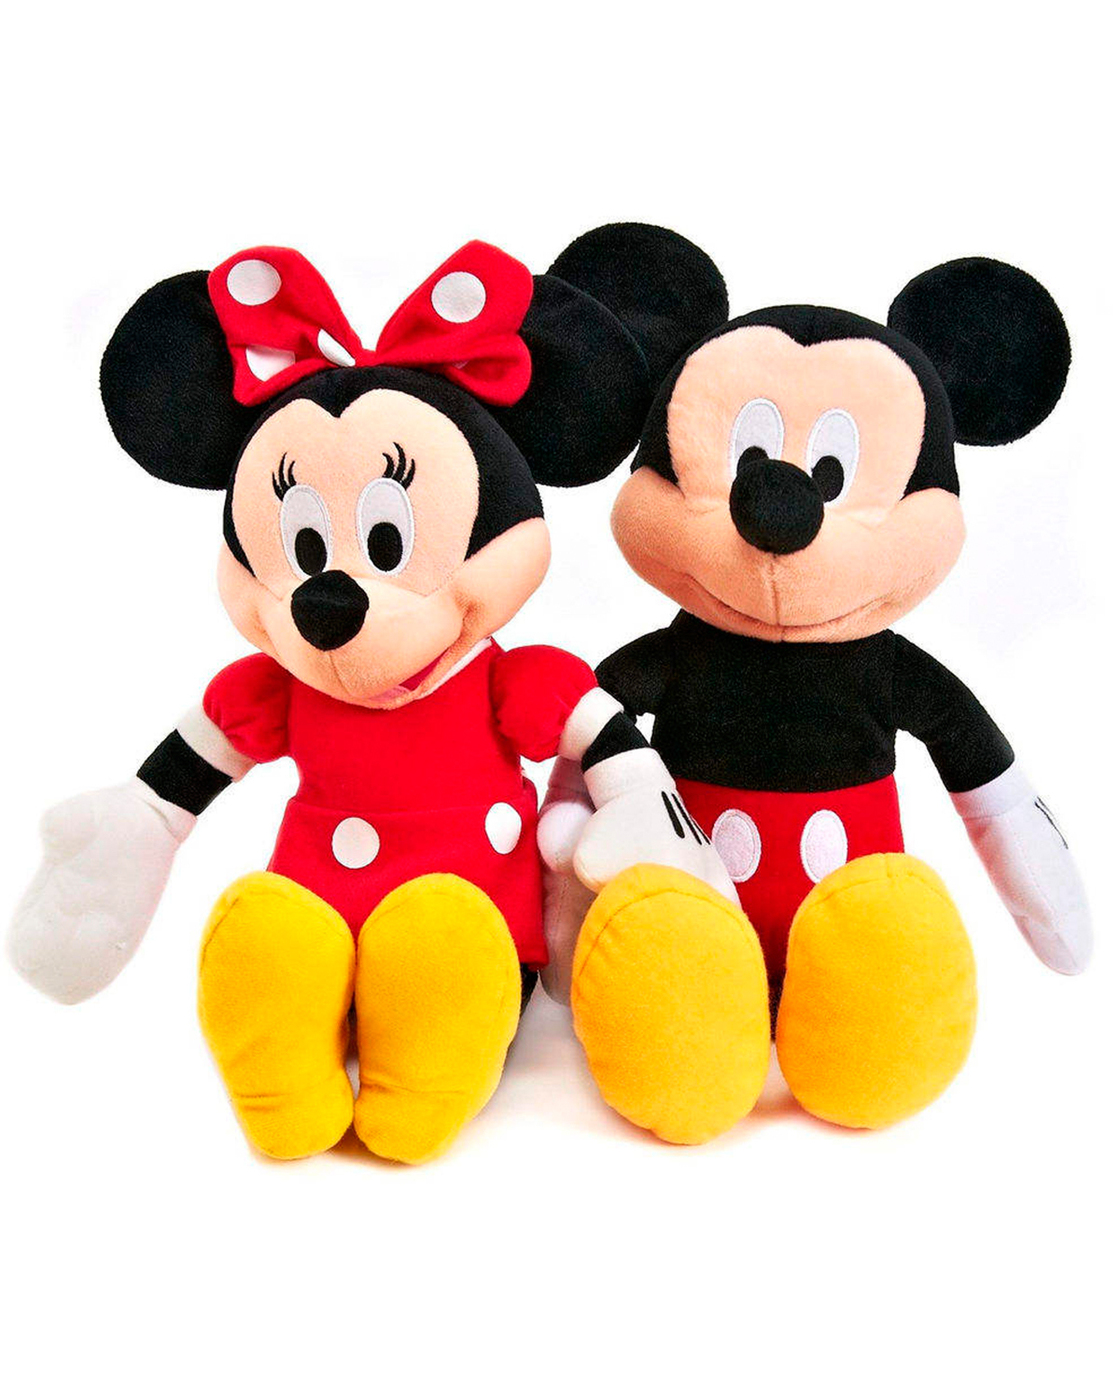 Мягкие игрушки Микки и Минни Маус Mickey Minnie Mouse, 2 шт. 35 см